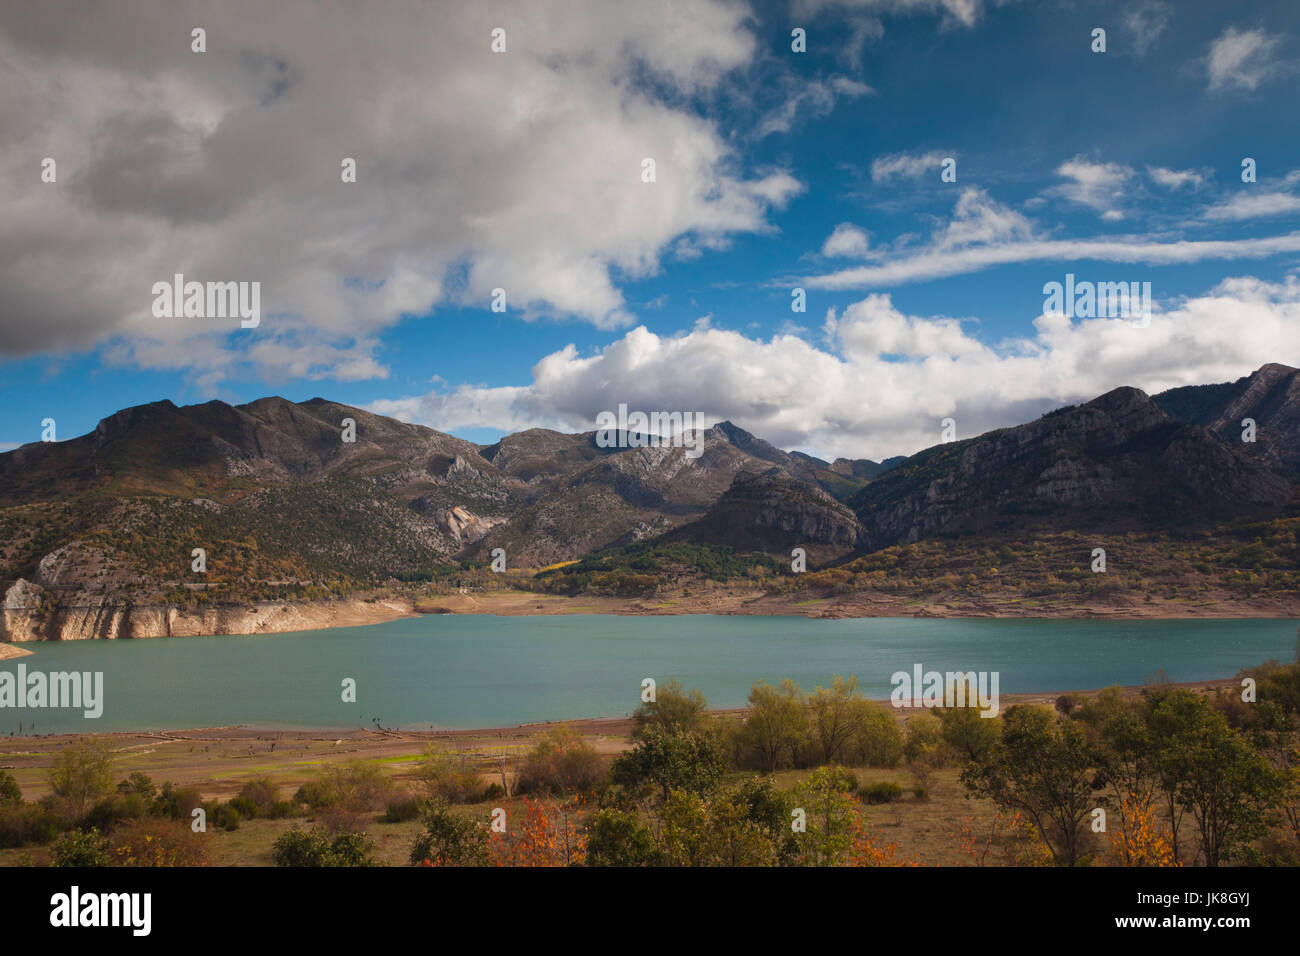 Spain, Castilla y Leon Region, Leon Province, Mirantes, landscape by the Embalse de los Barrios de Luna reservoir Stock Photo